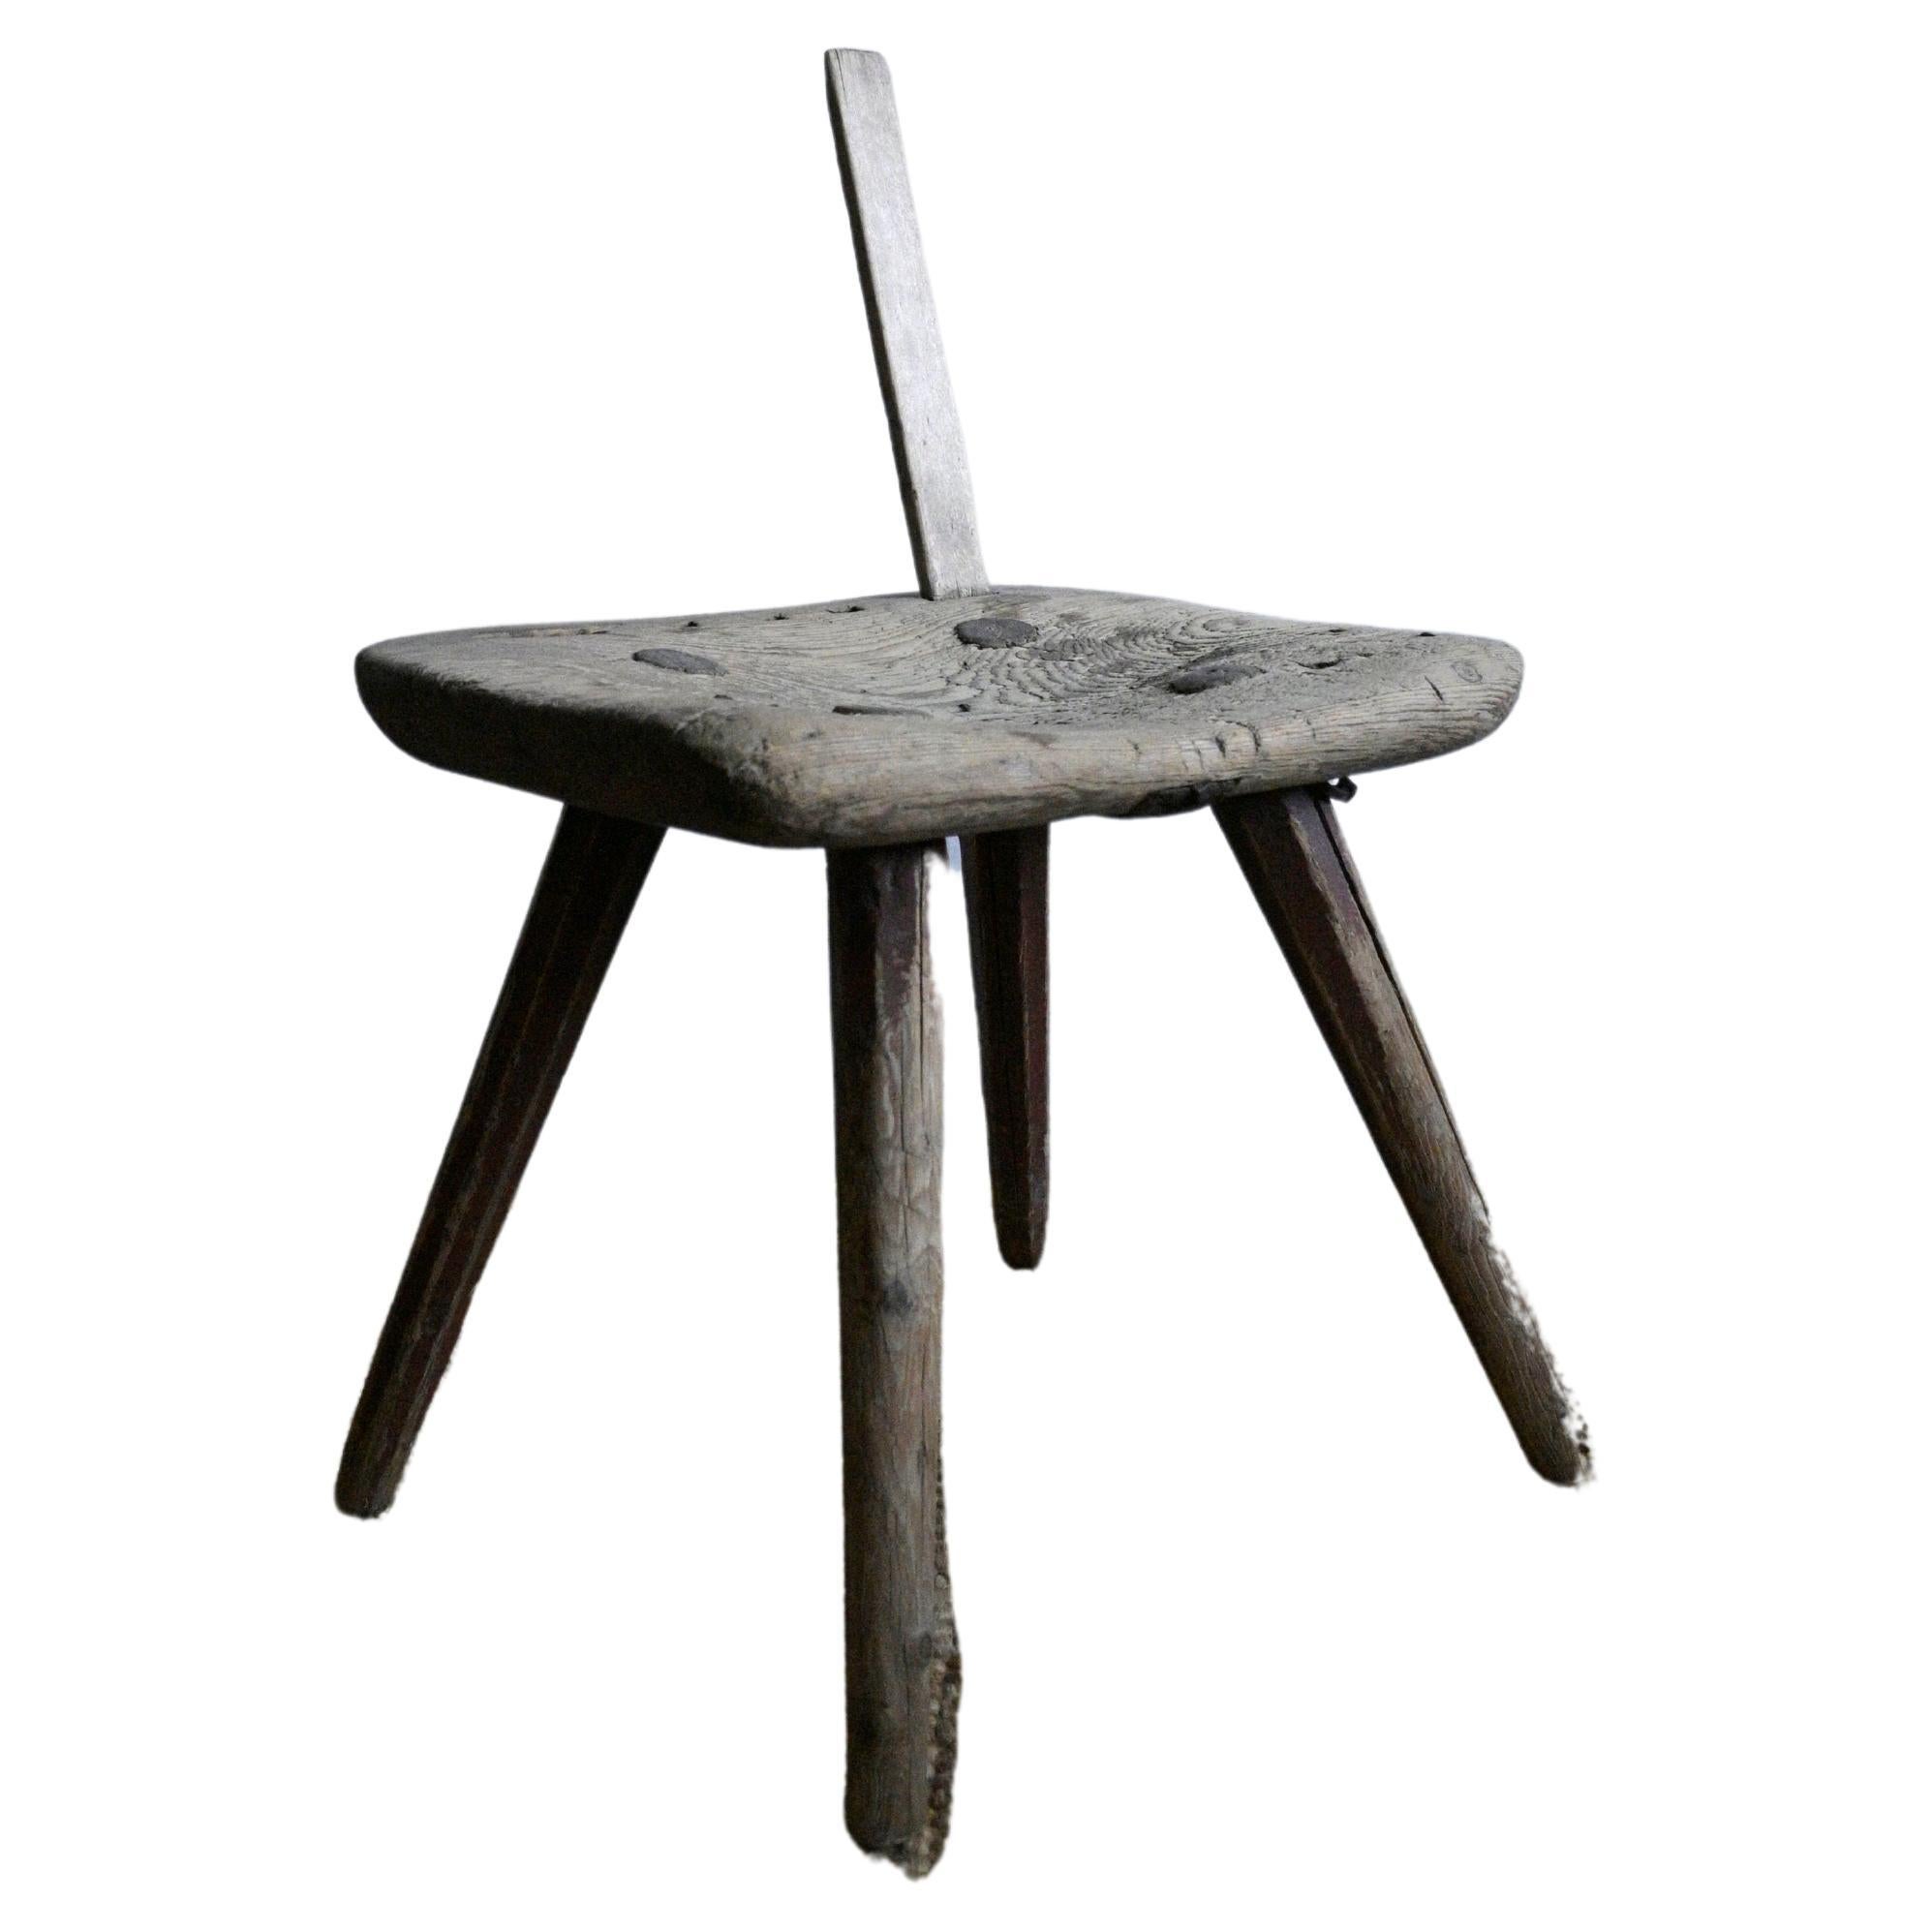 Swedish Primitive Folkart Chair/Stool from Gräsmyran, Edsbyn cirka 1830s For Sale